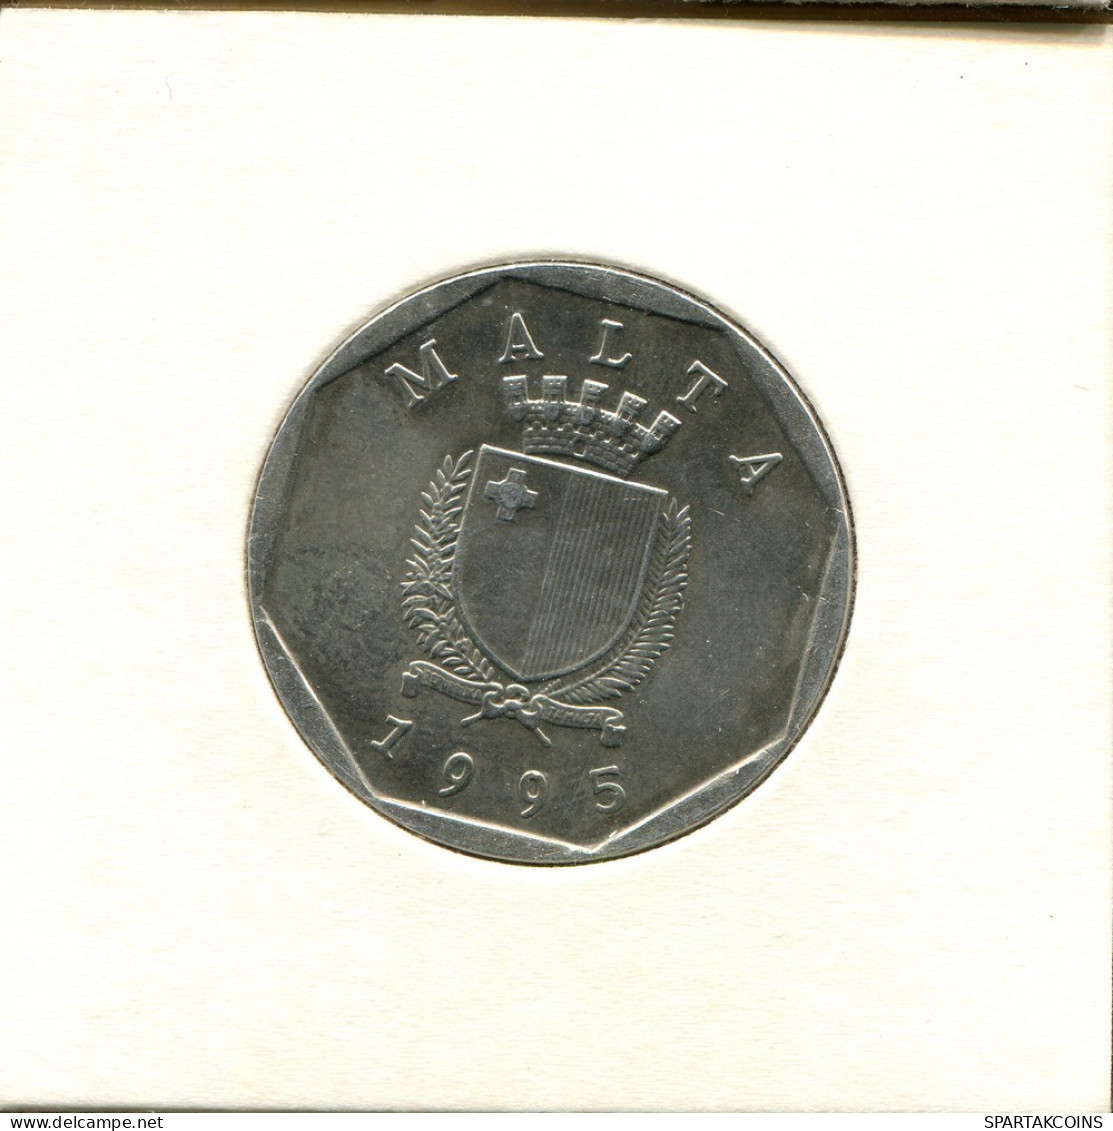 50 CENTS 1995 MALTA Moneda #AS640.E.A - Malte